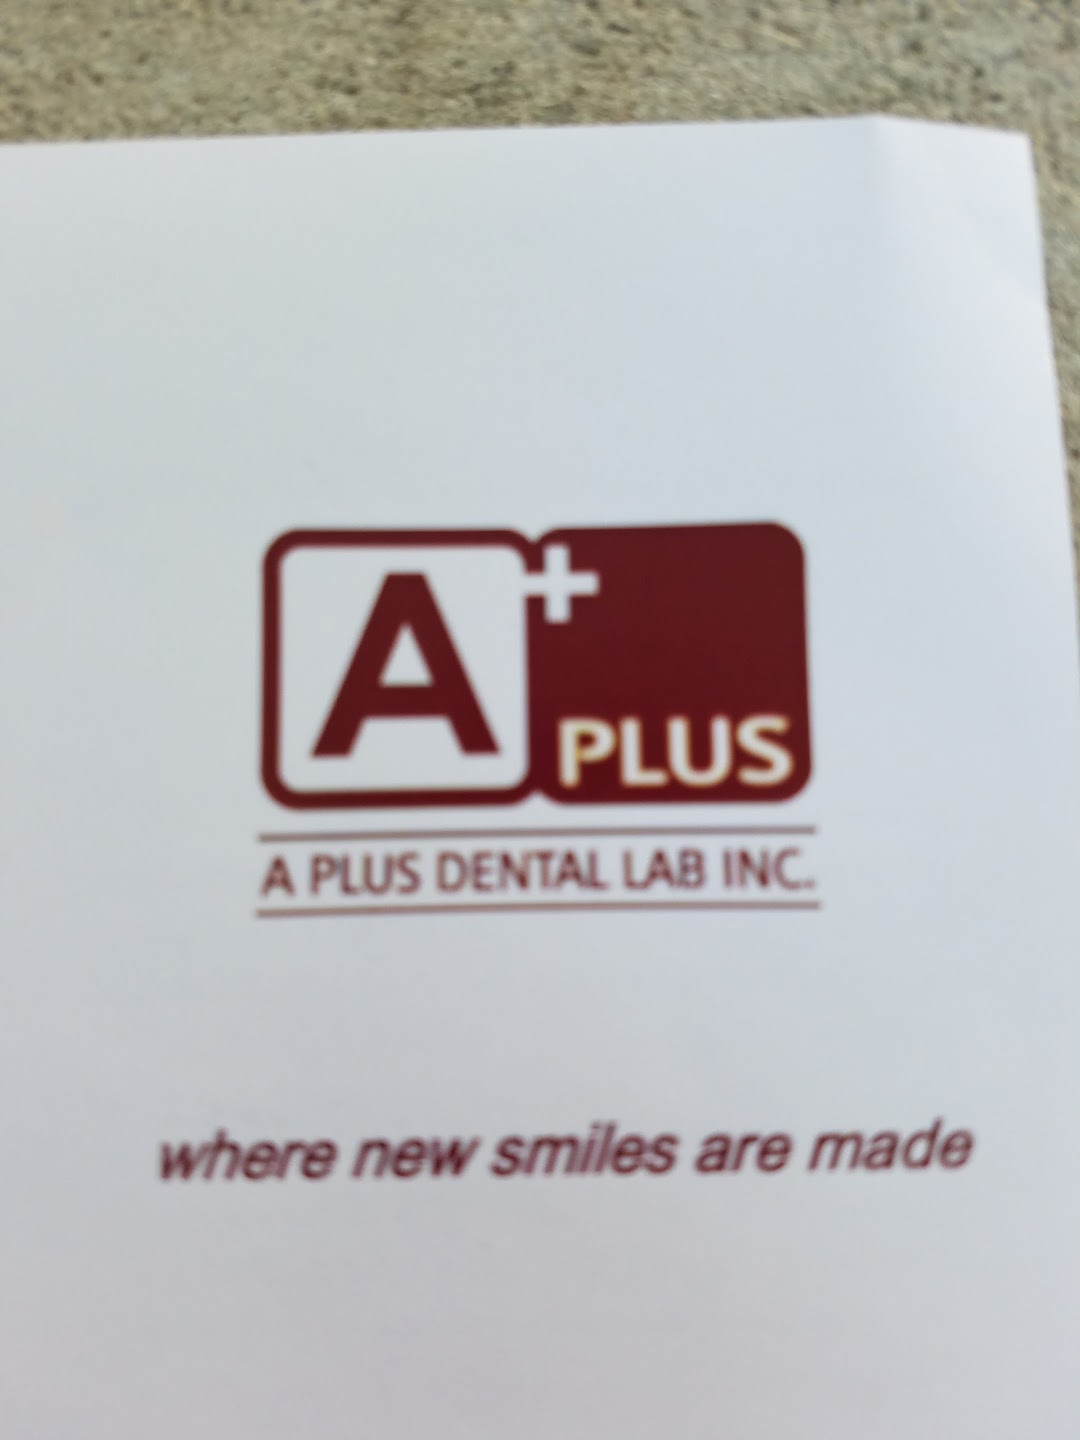 Eagles Dental Lab